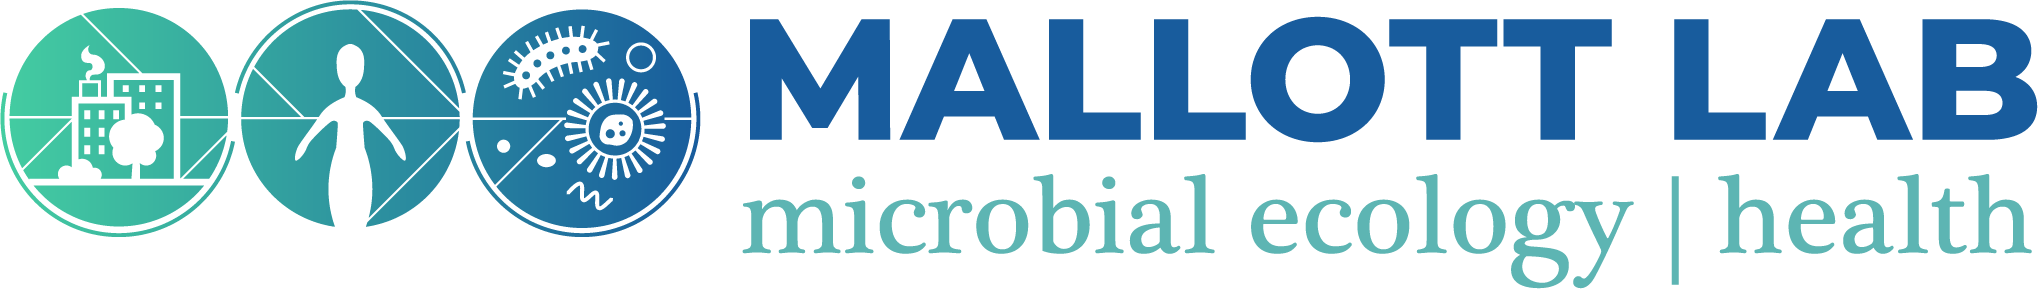 Mallott Lab logo